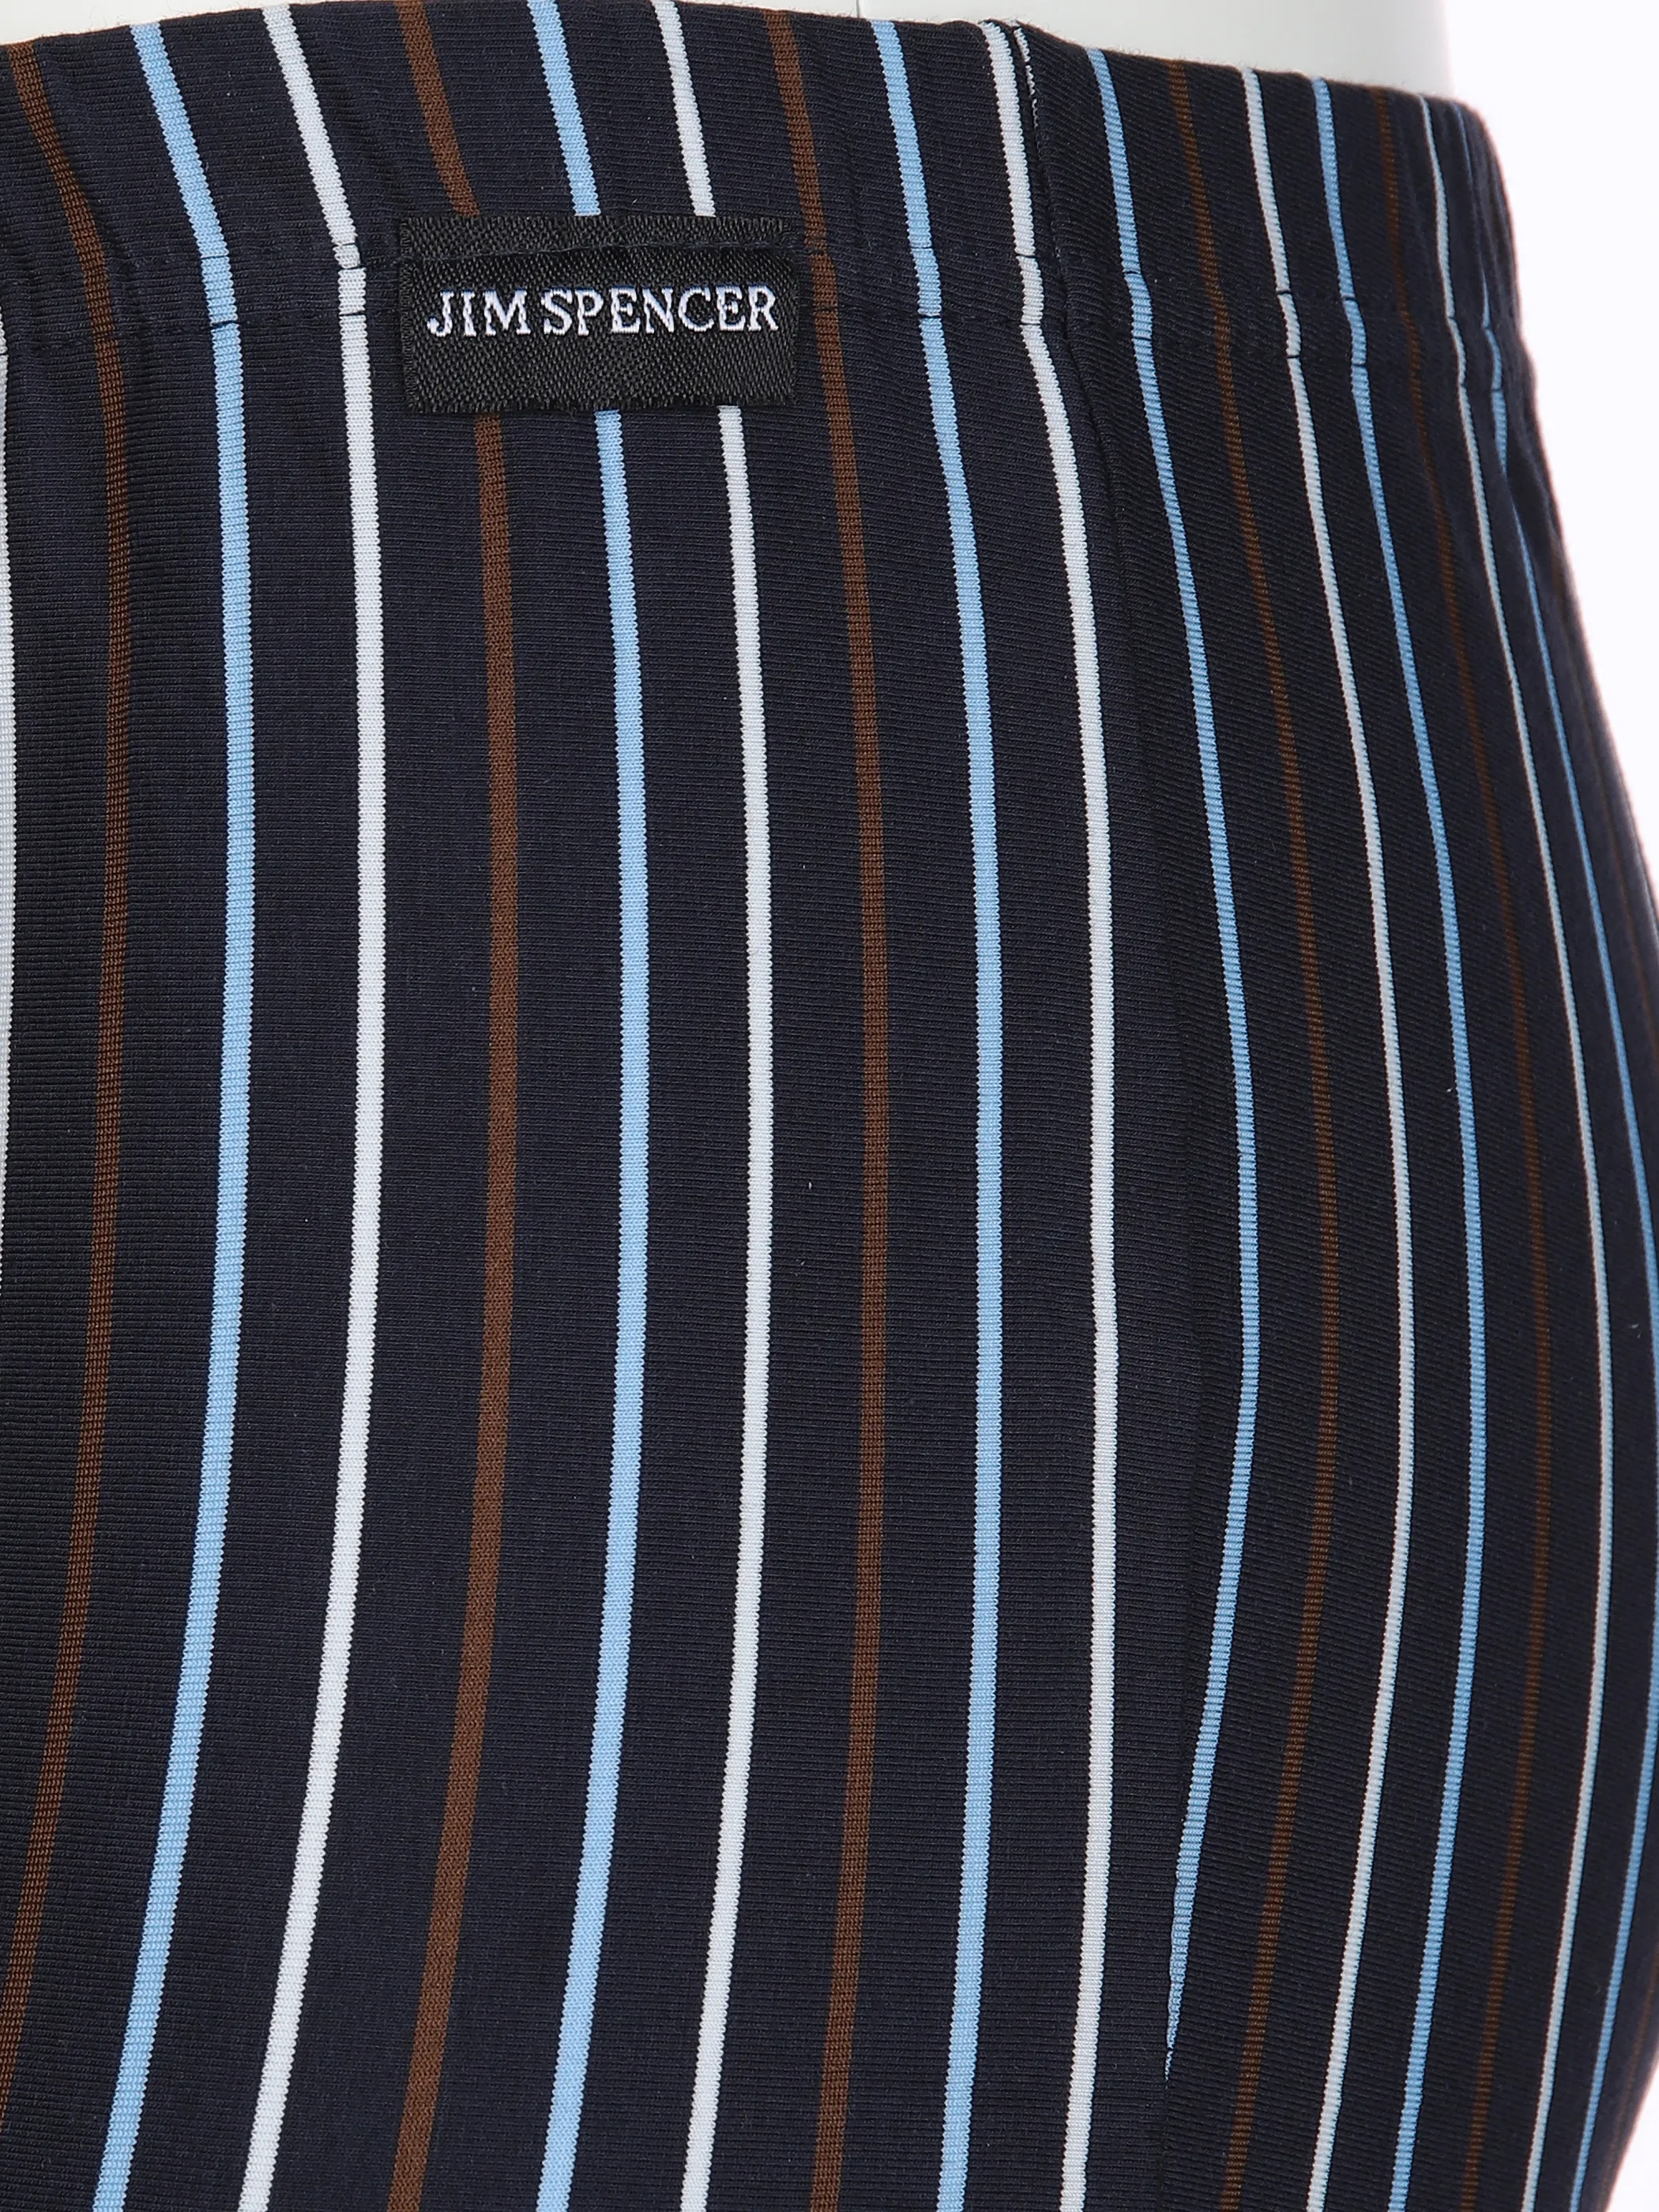 Jim Spencer He-Retro 2er Pack Blau 720071 018MARINE 3